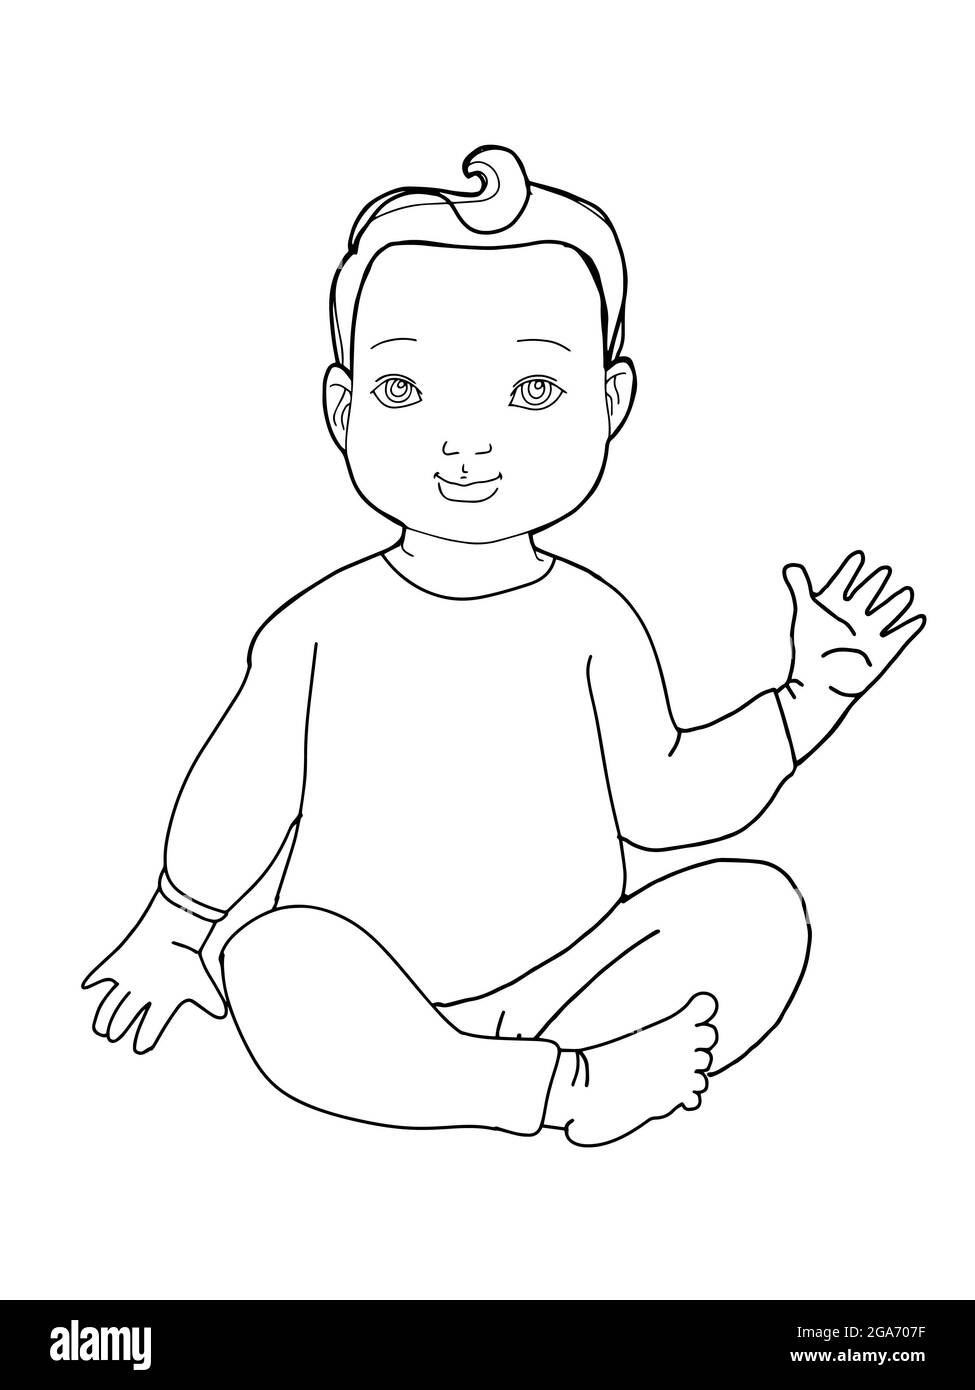 Cute ,cartoon ,black curly boy baby  sitting ,hi five,illustration,line drawing Stock Photo